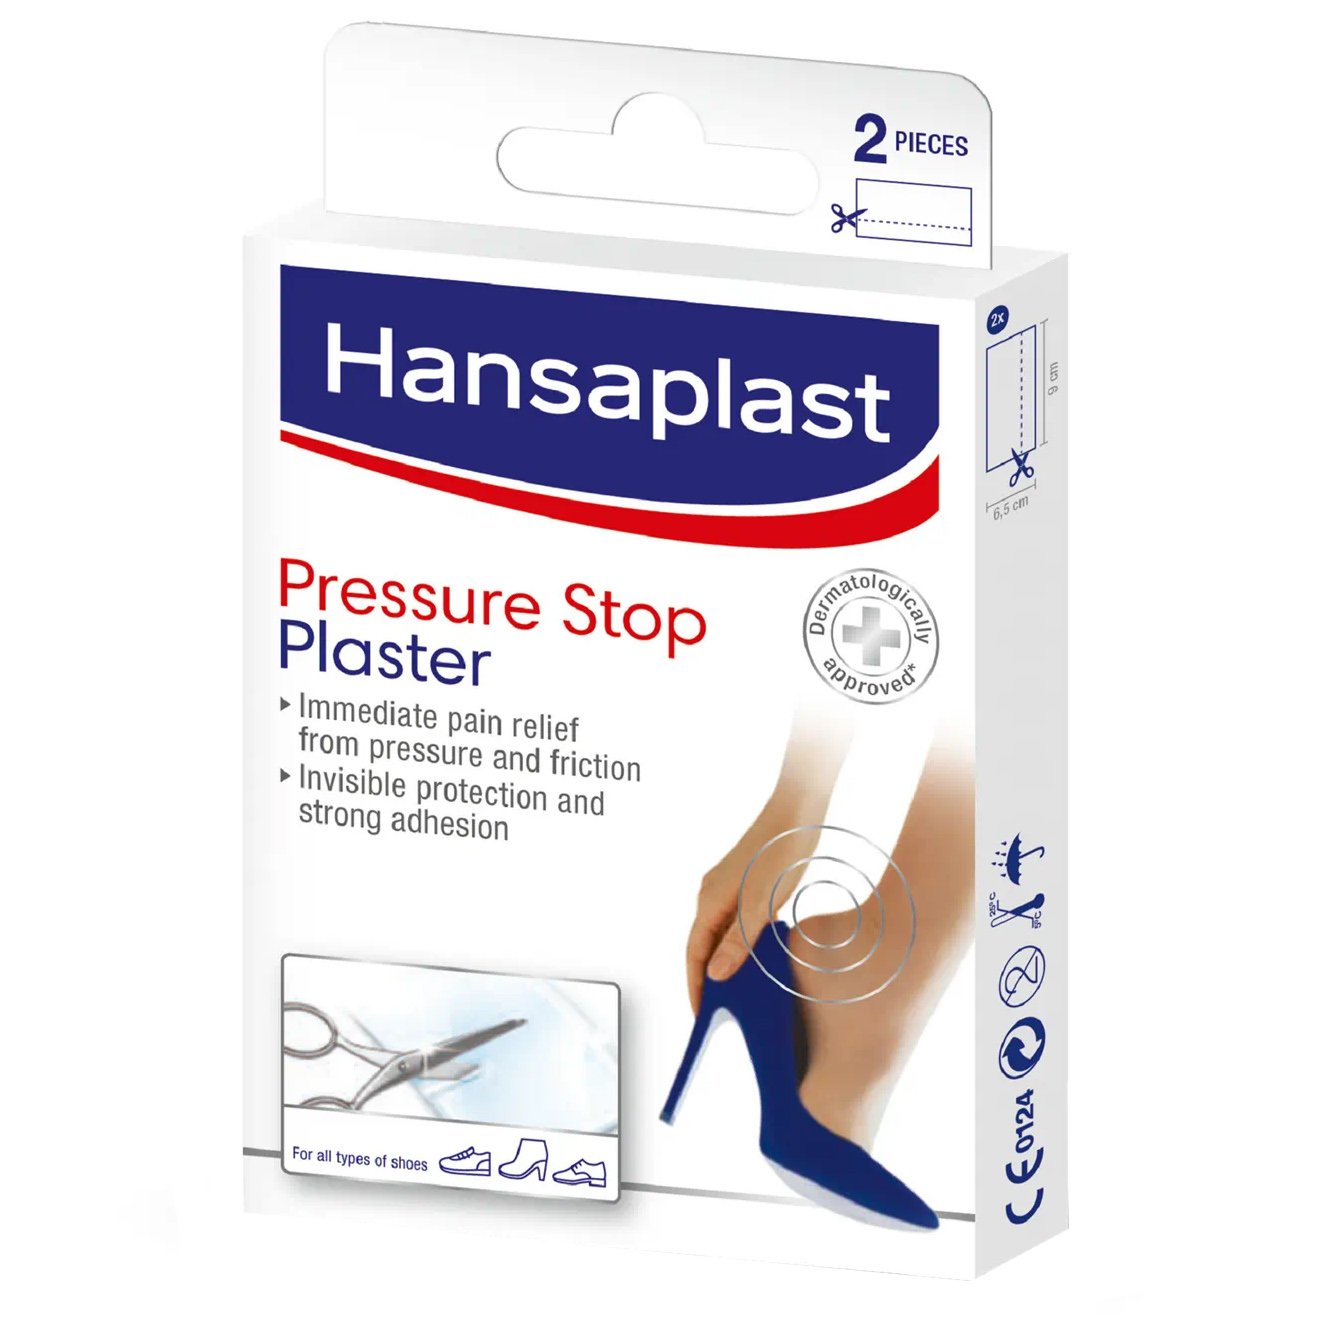 Hansaplast Hansaplast Pressure Stop Plaster Προστατευτικά Επιθέματα για την Άμεση Ανακούφιση από Πόνο, Πίεση & Τριβή των Παπουτσιών 2 Τεμάχια